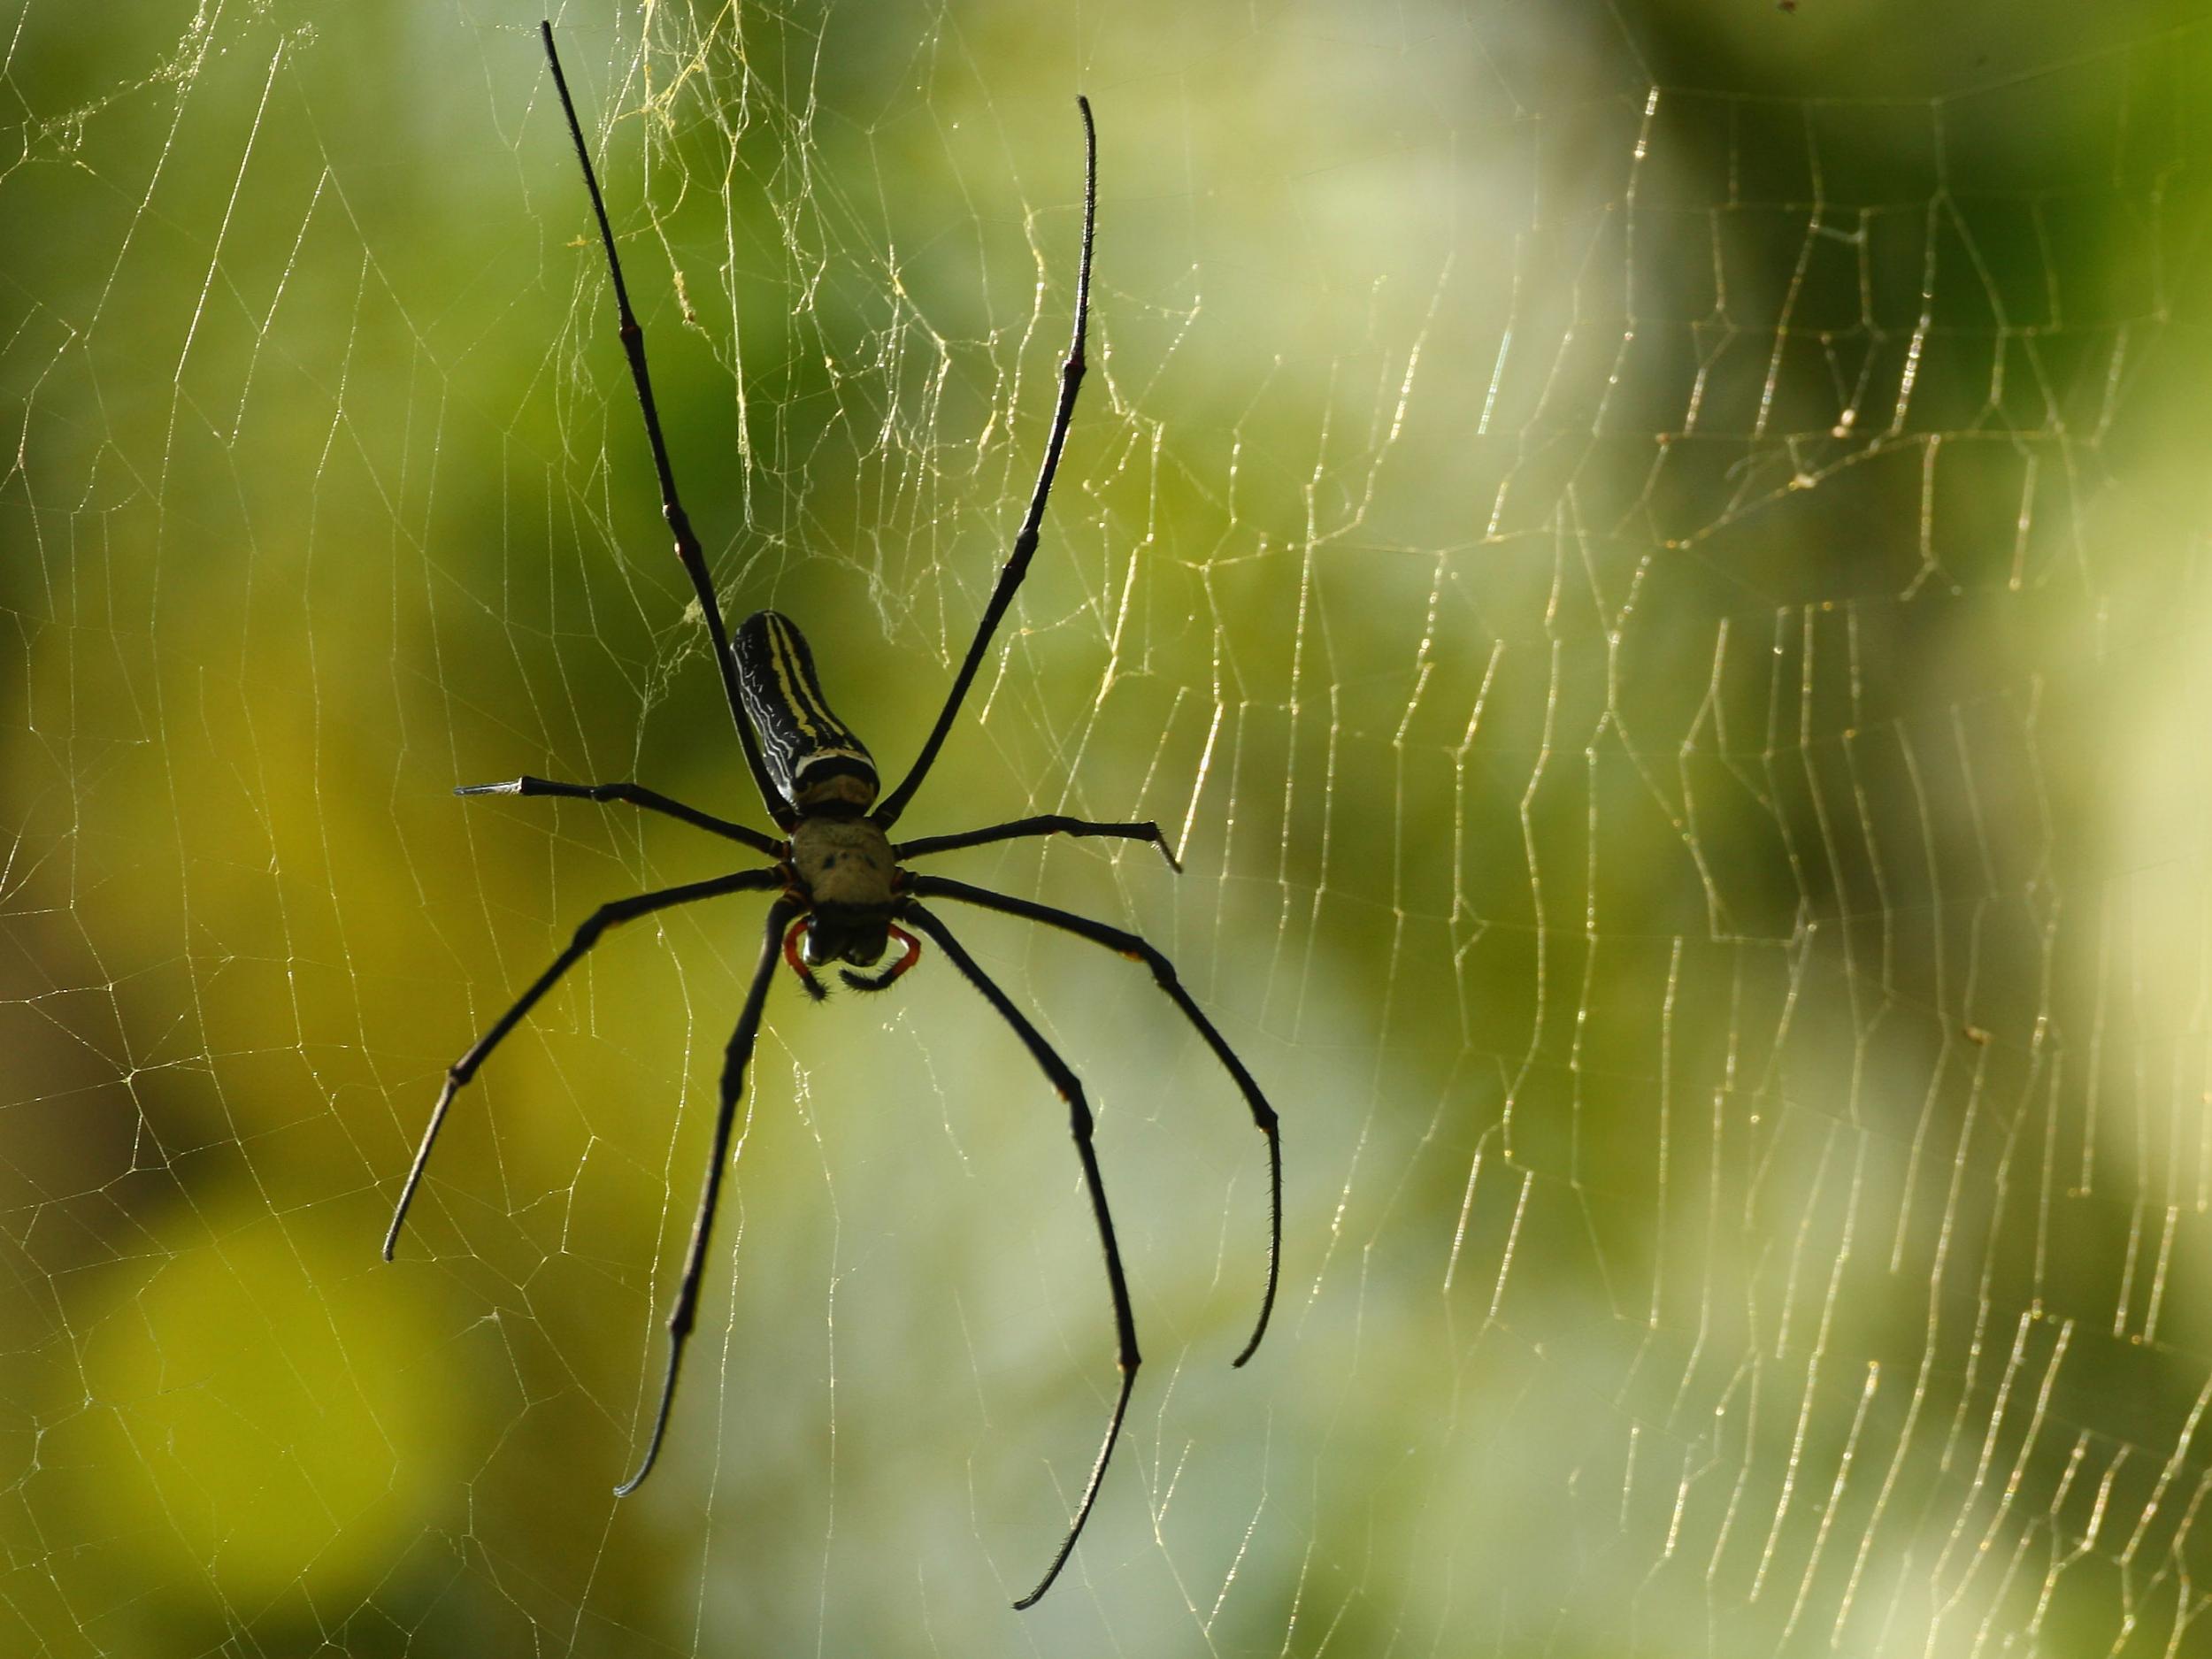 A spider in a web in Shenzhen, China